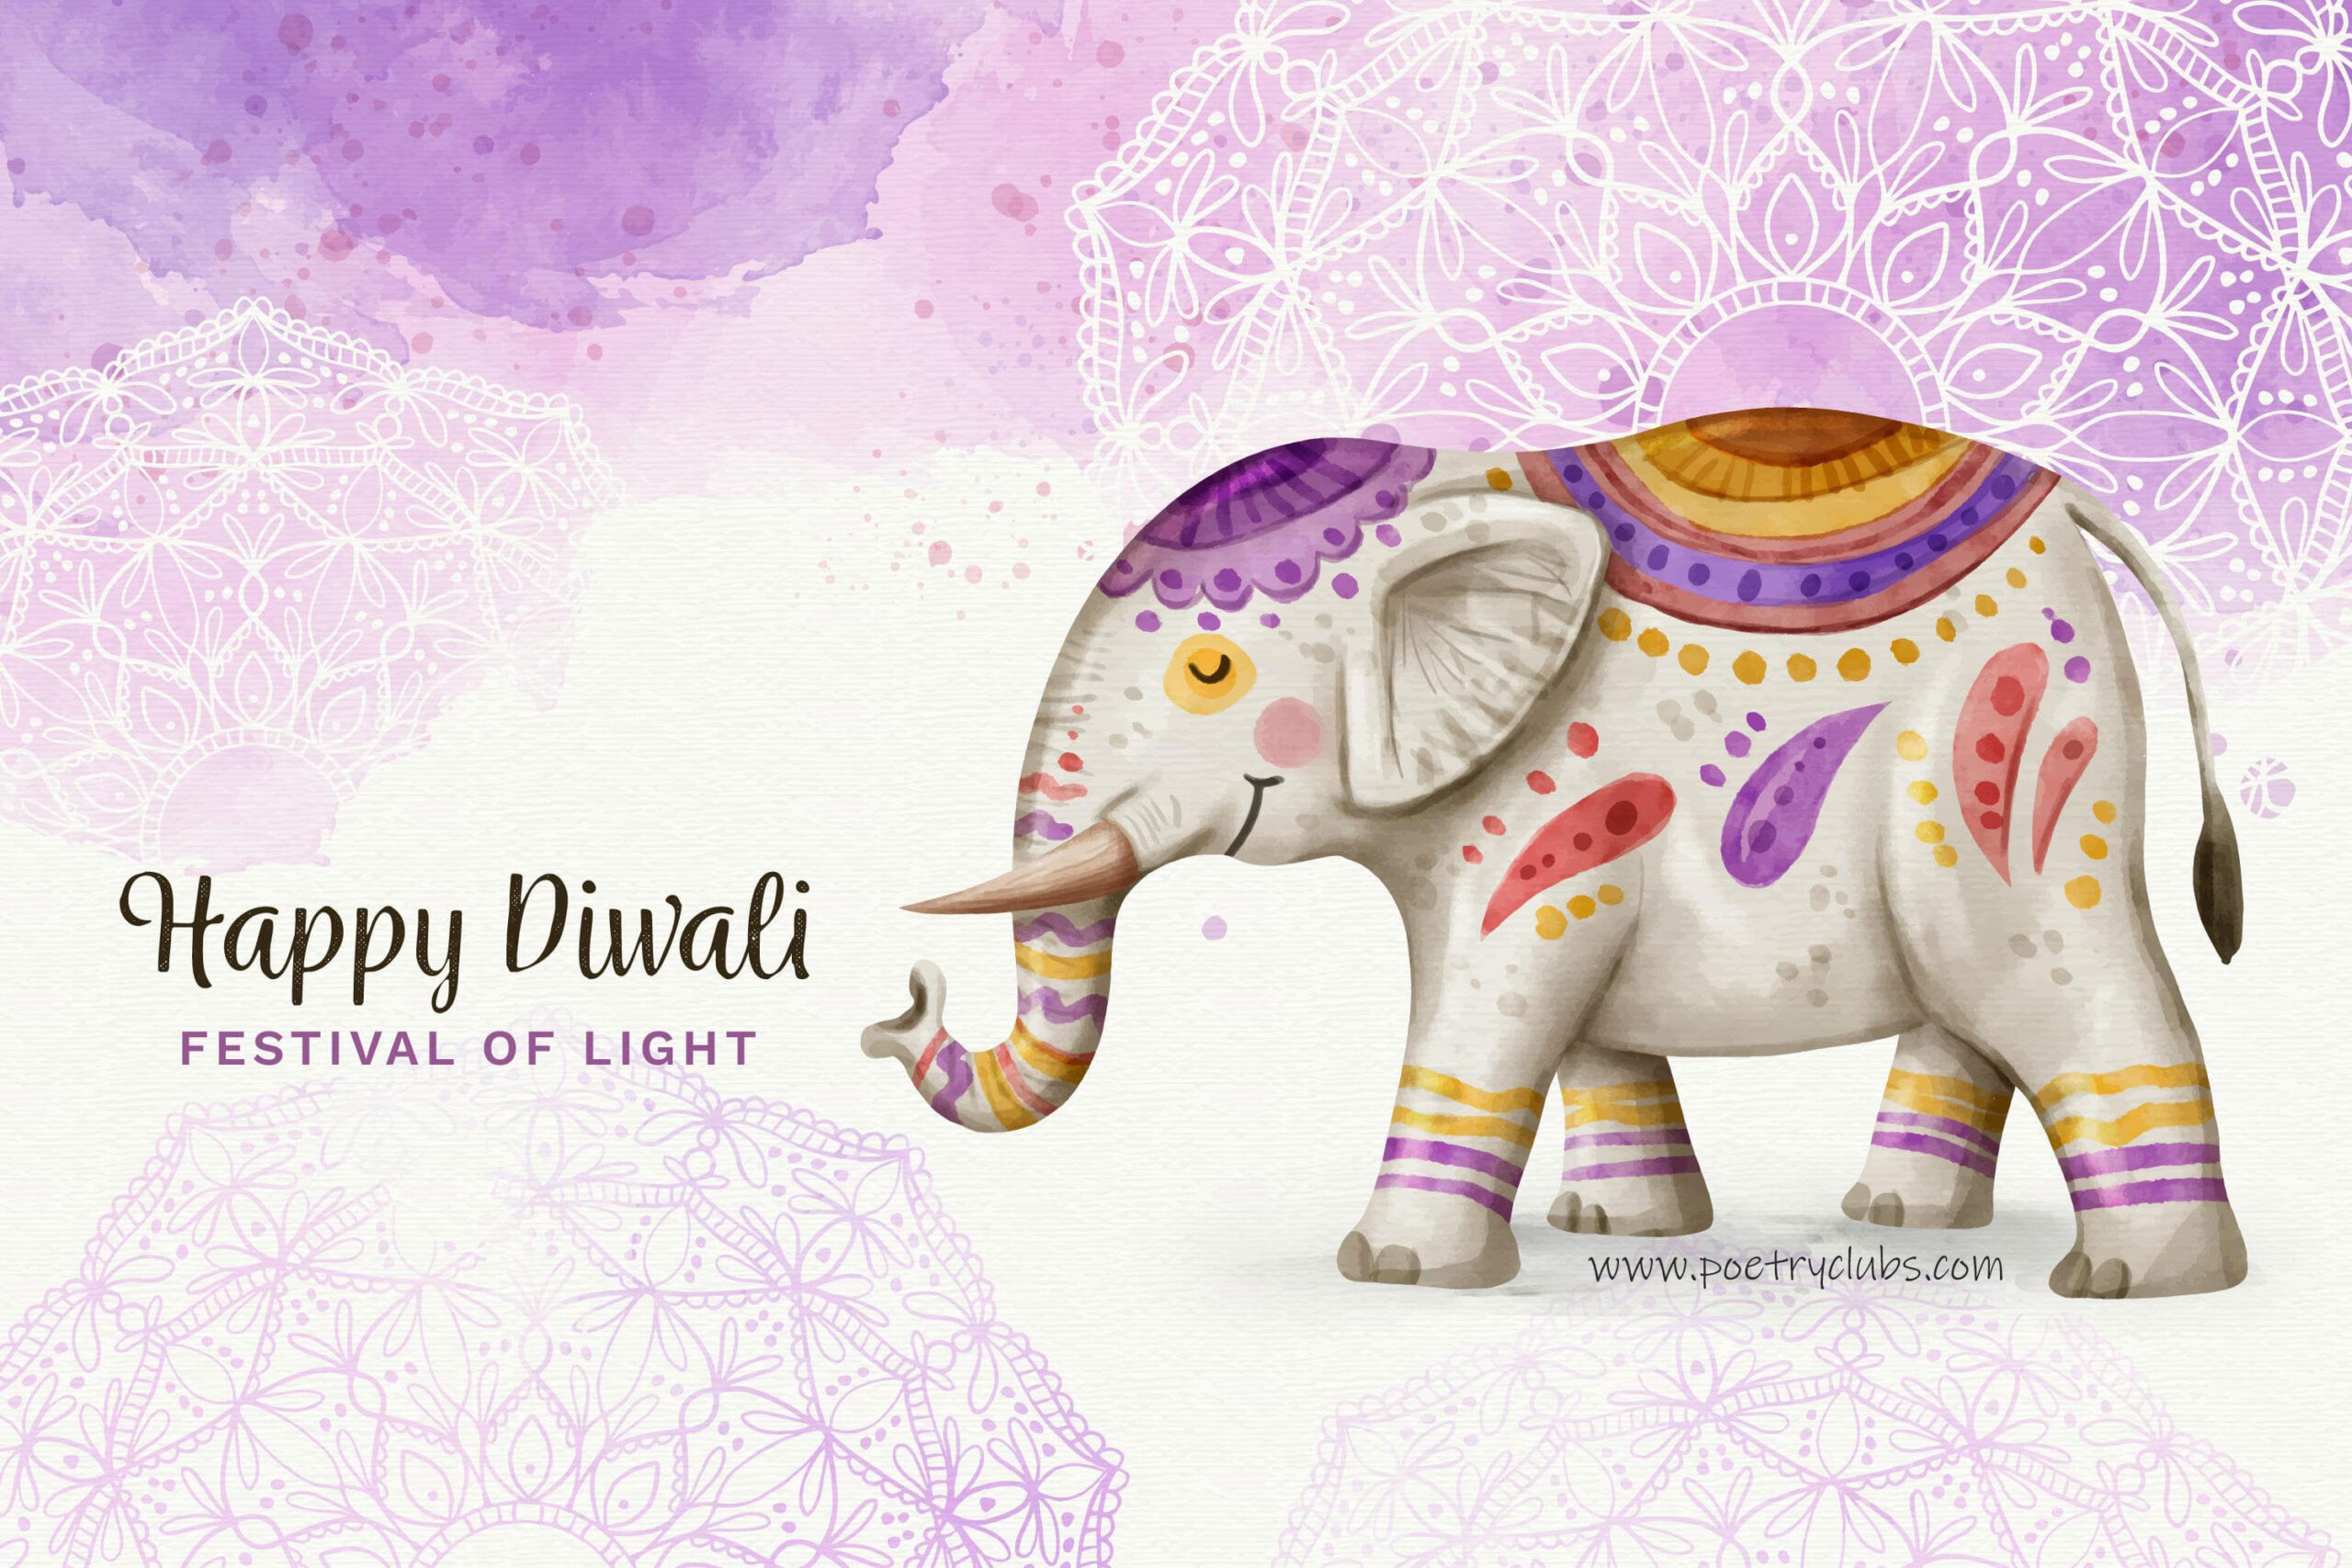 Happy Diwali 2021 Image and HD Wallpaper Free Download